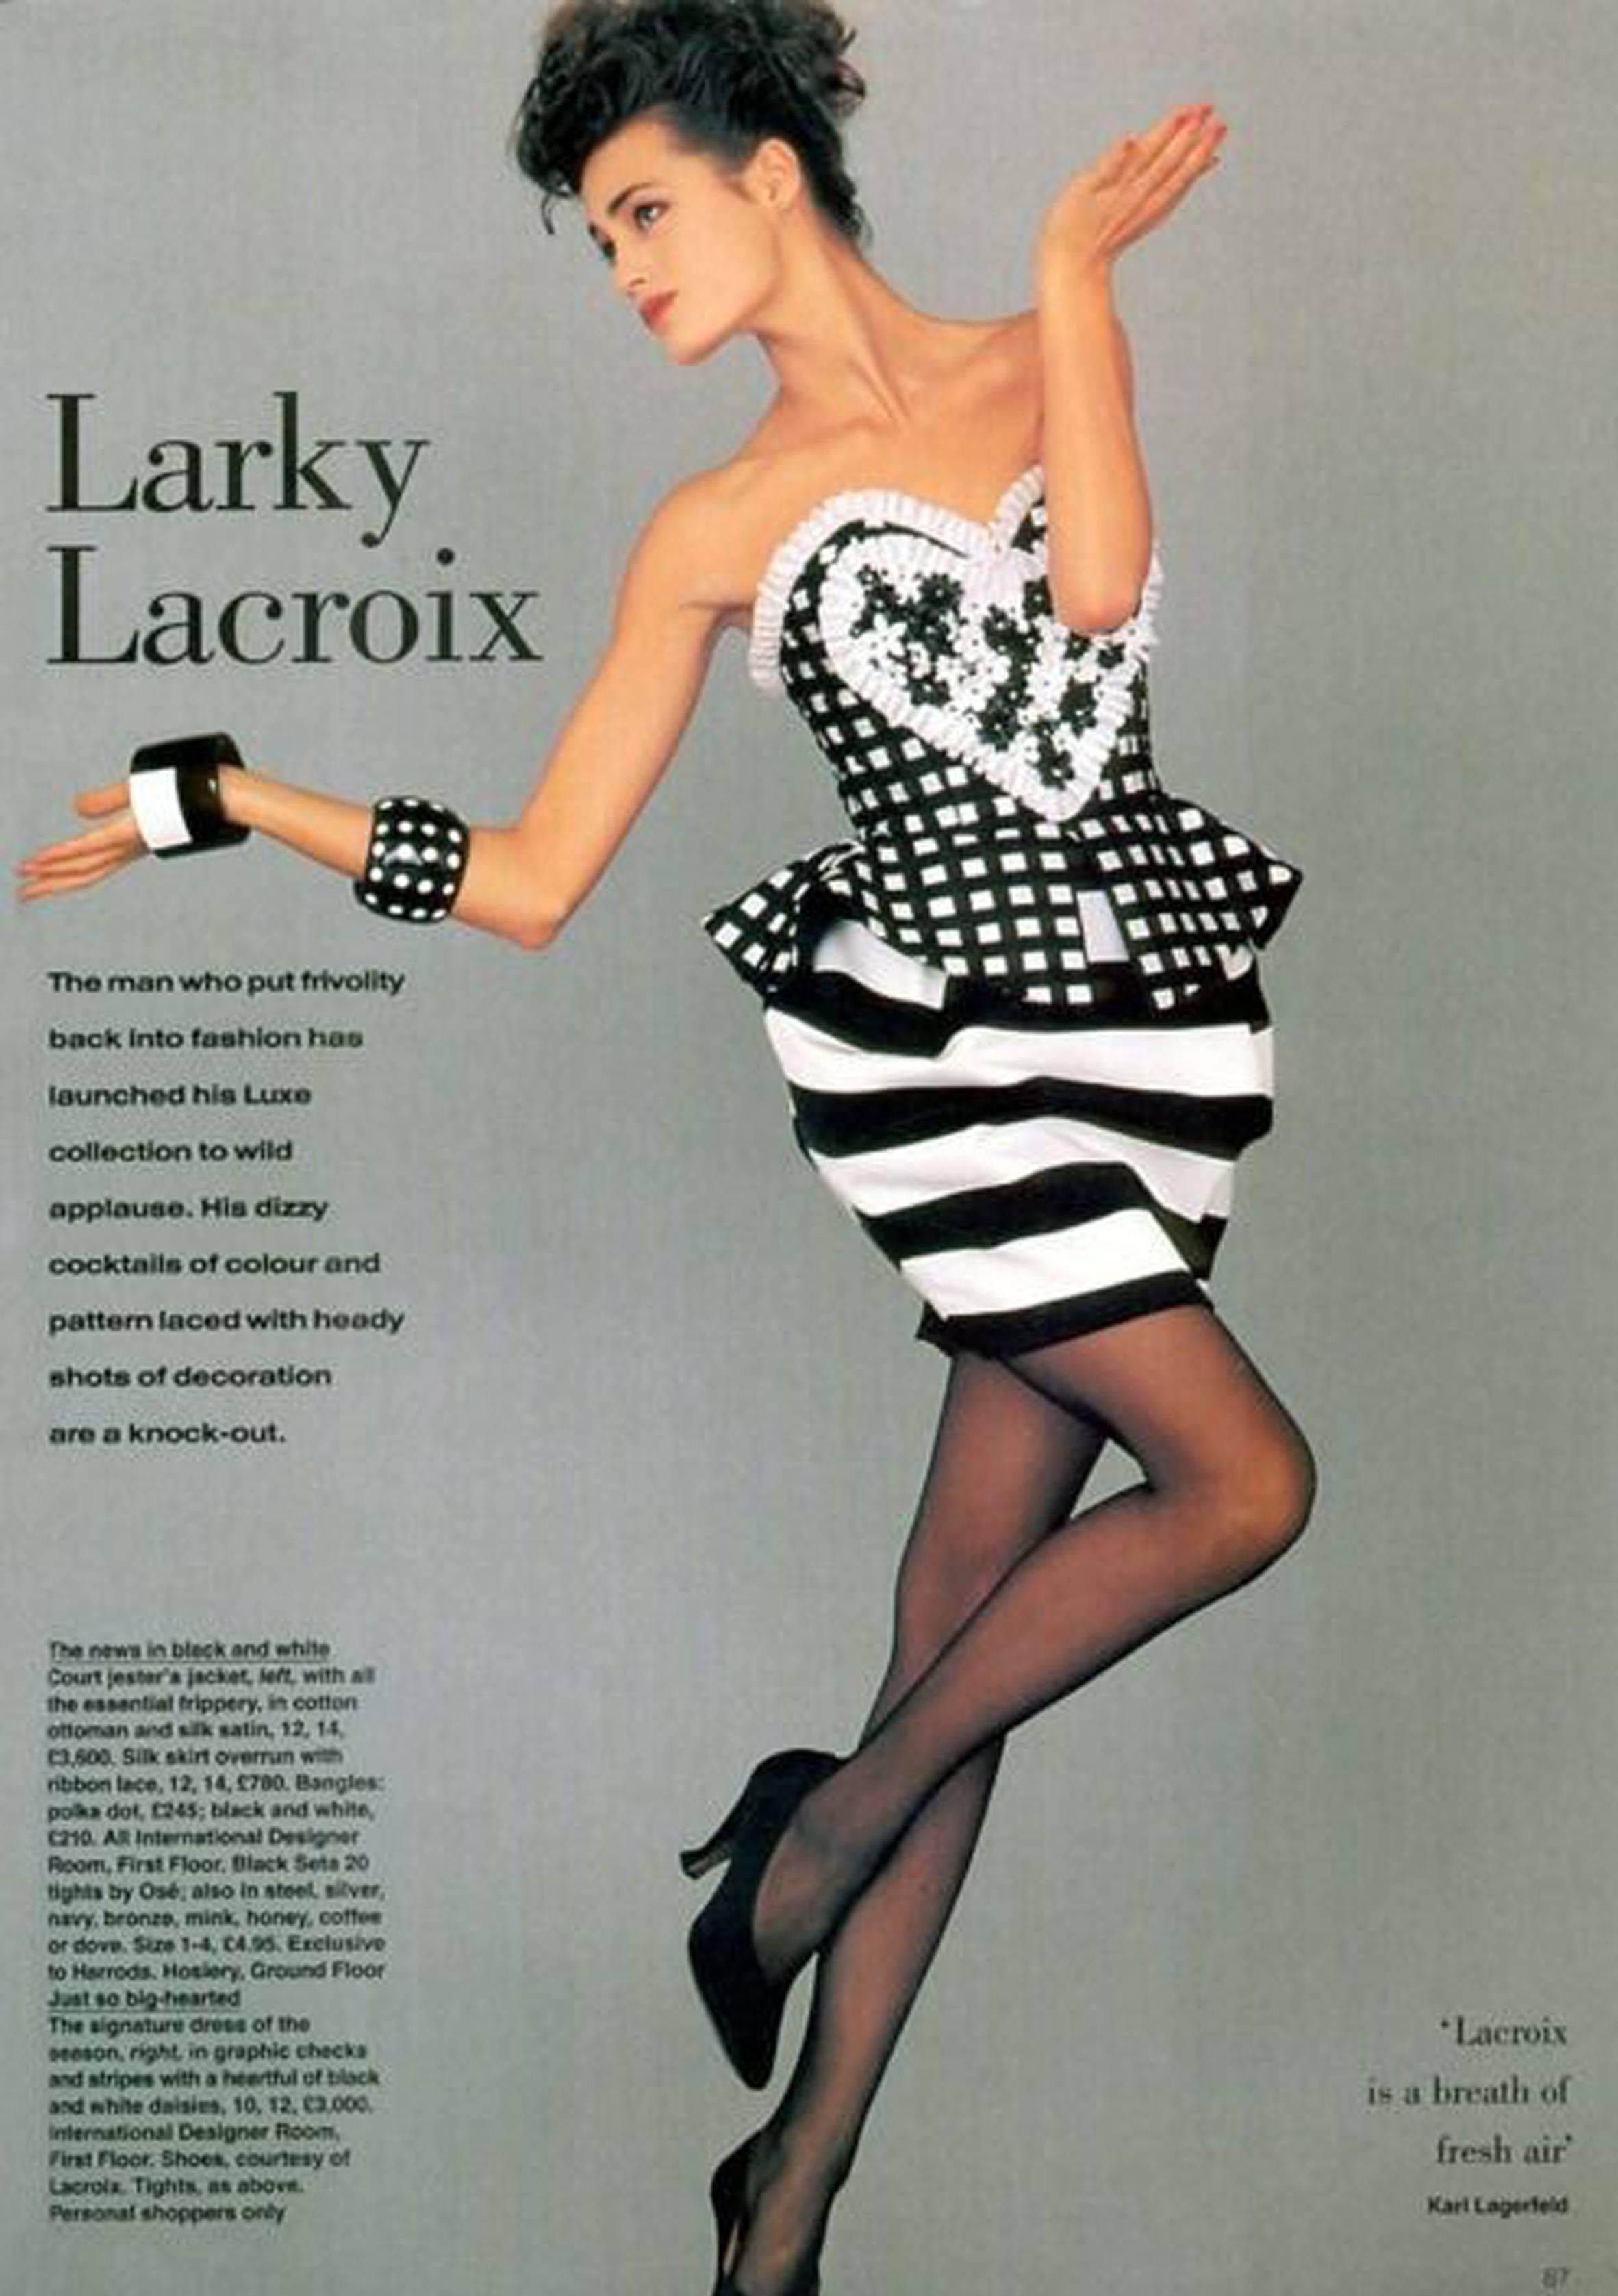 Christian Lacroix polkadot peplum bustier from the spring - summer 1988 runway collection. 

Waist 28